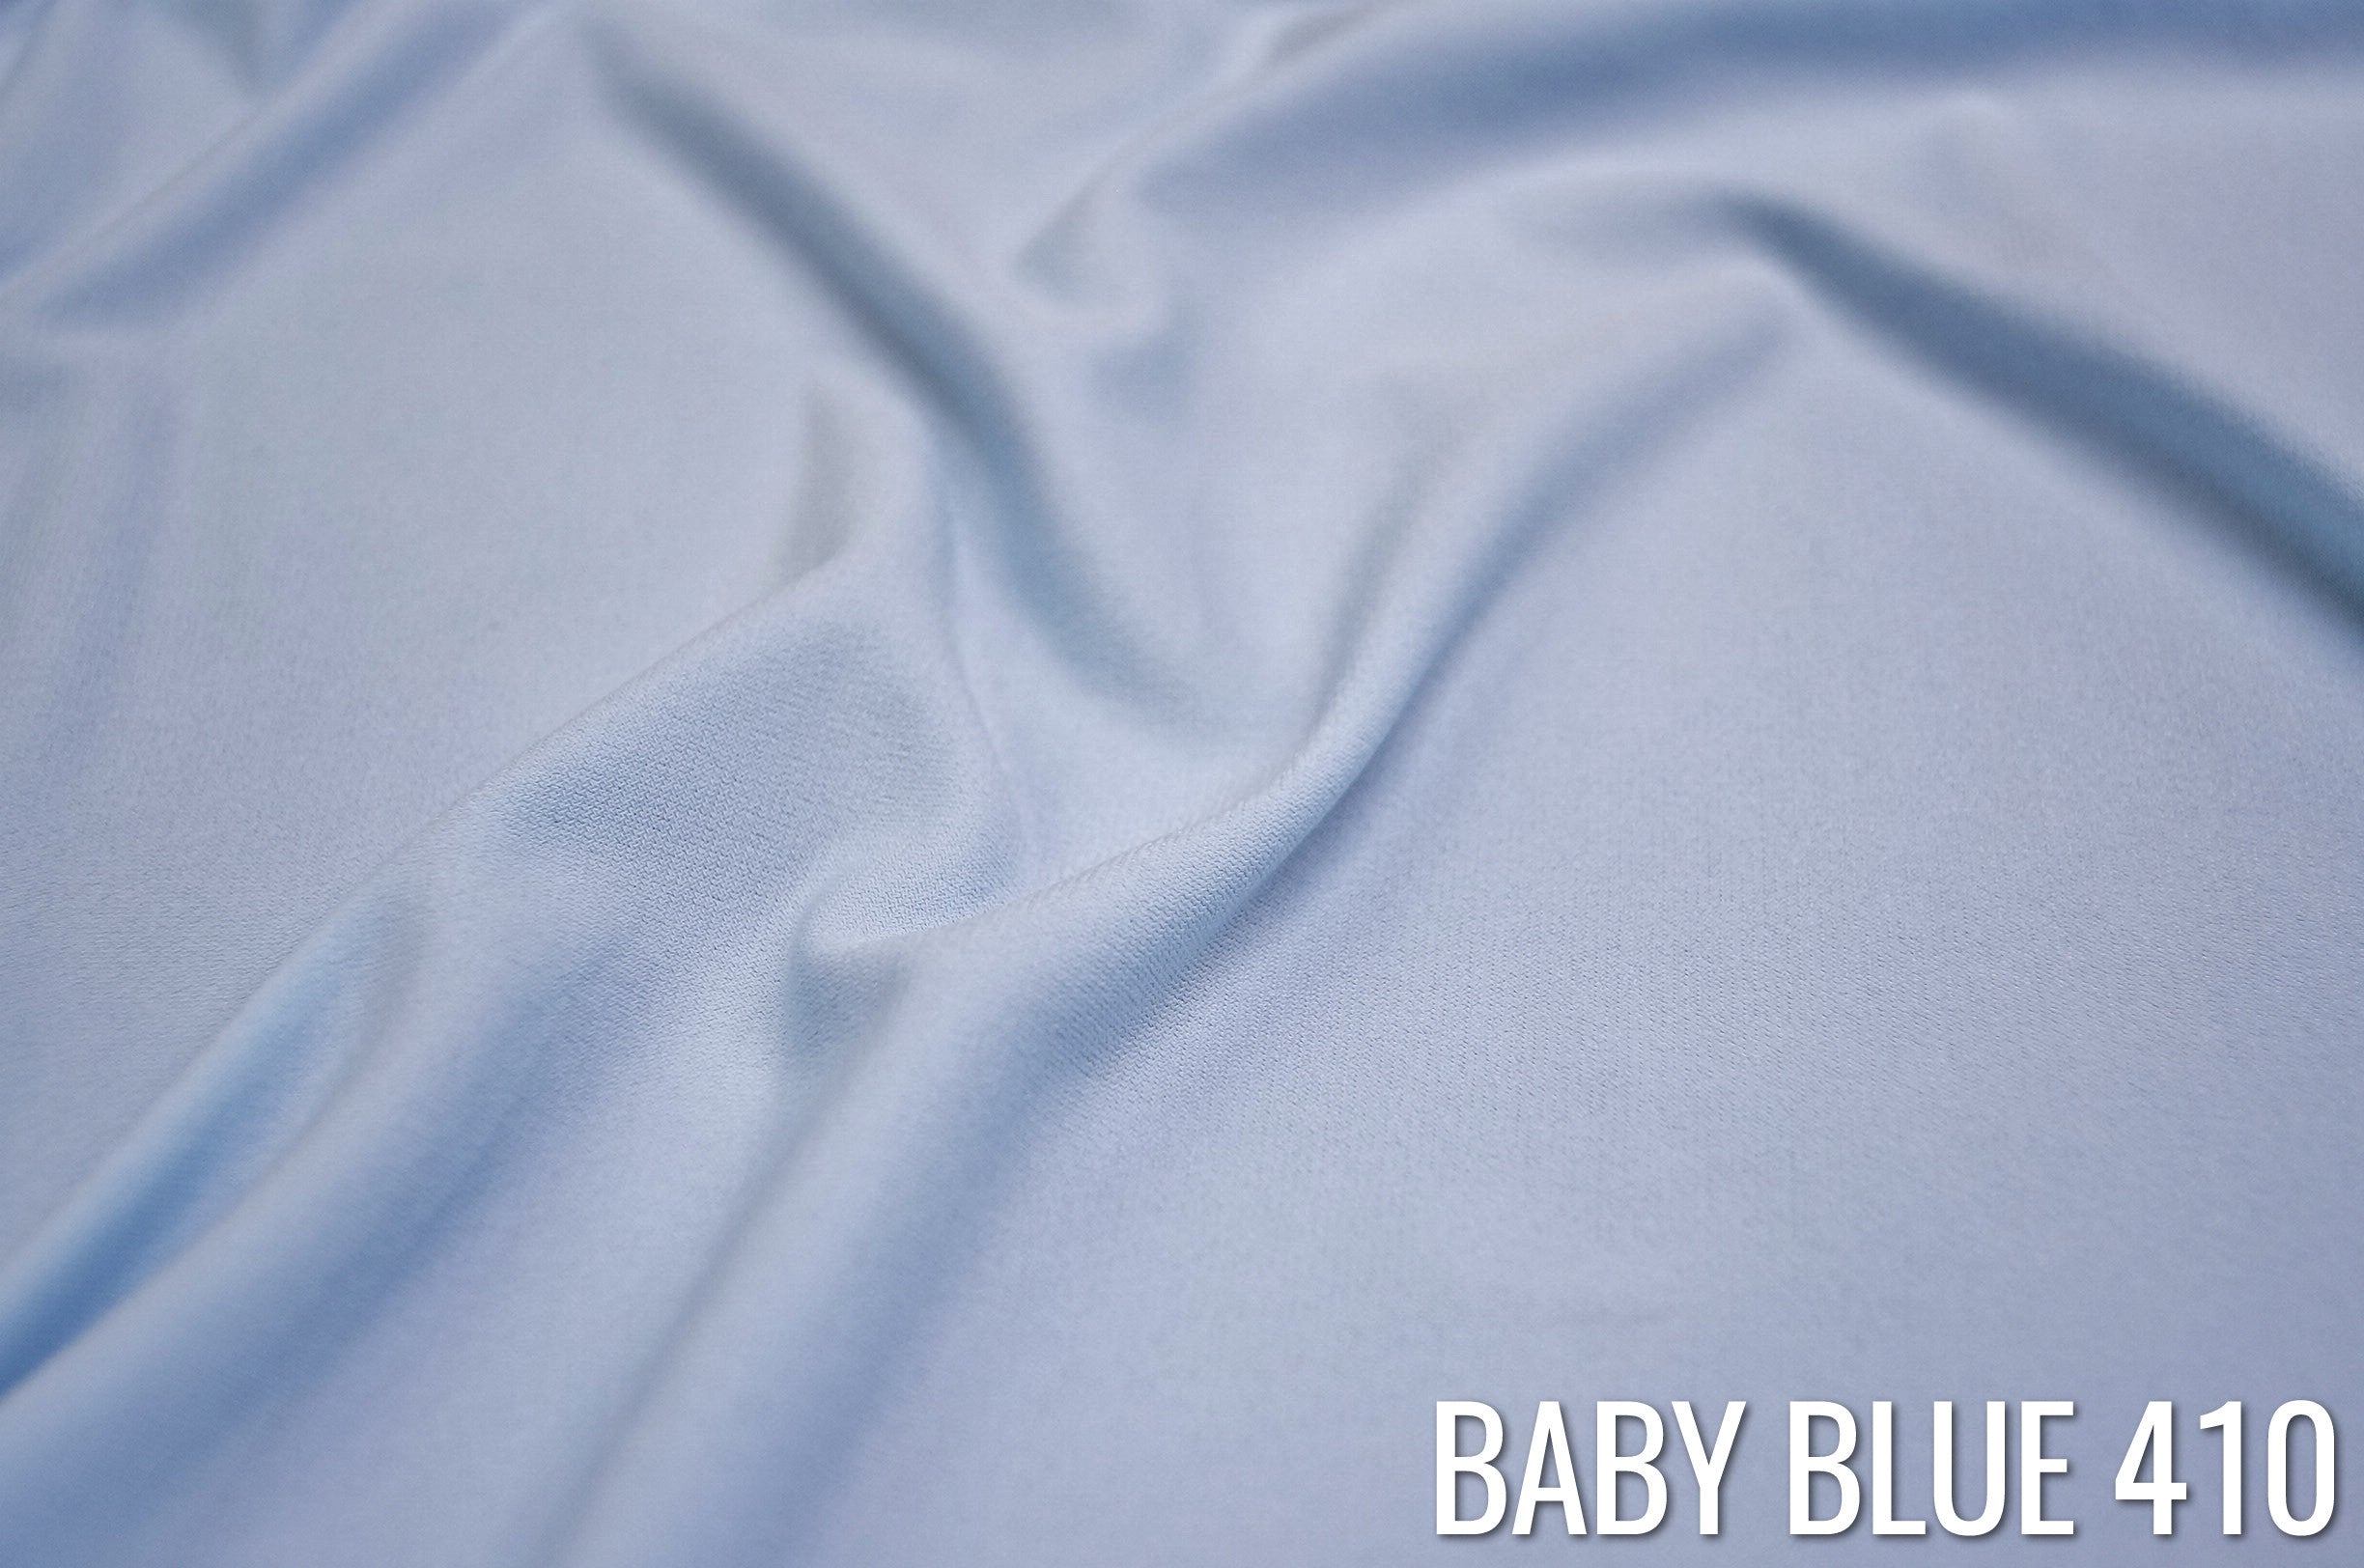 BABY BLUE 410